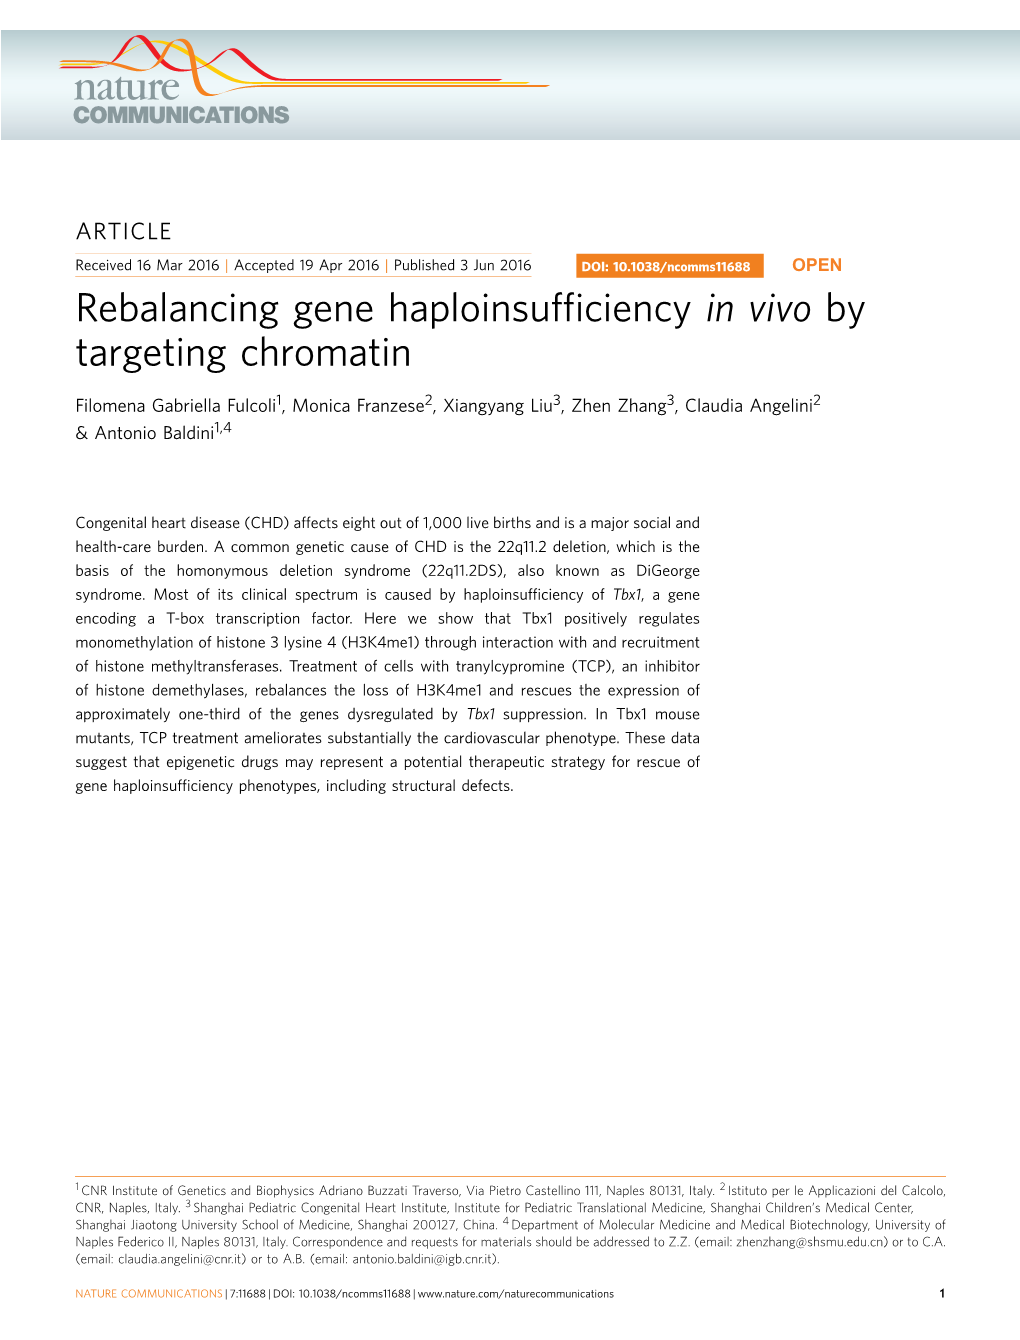 Rebalancing Gene Haploinsufficiency in Vivo by Targeting Chromatin